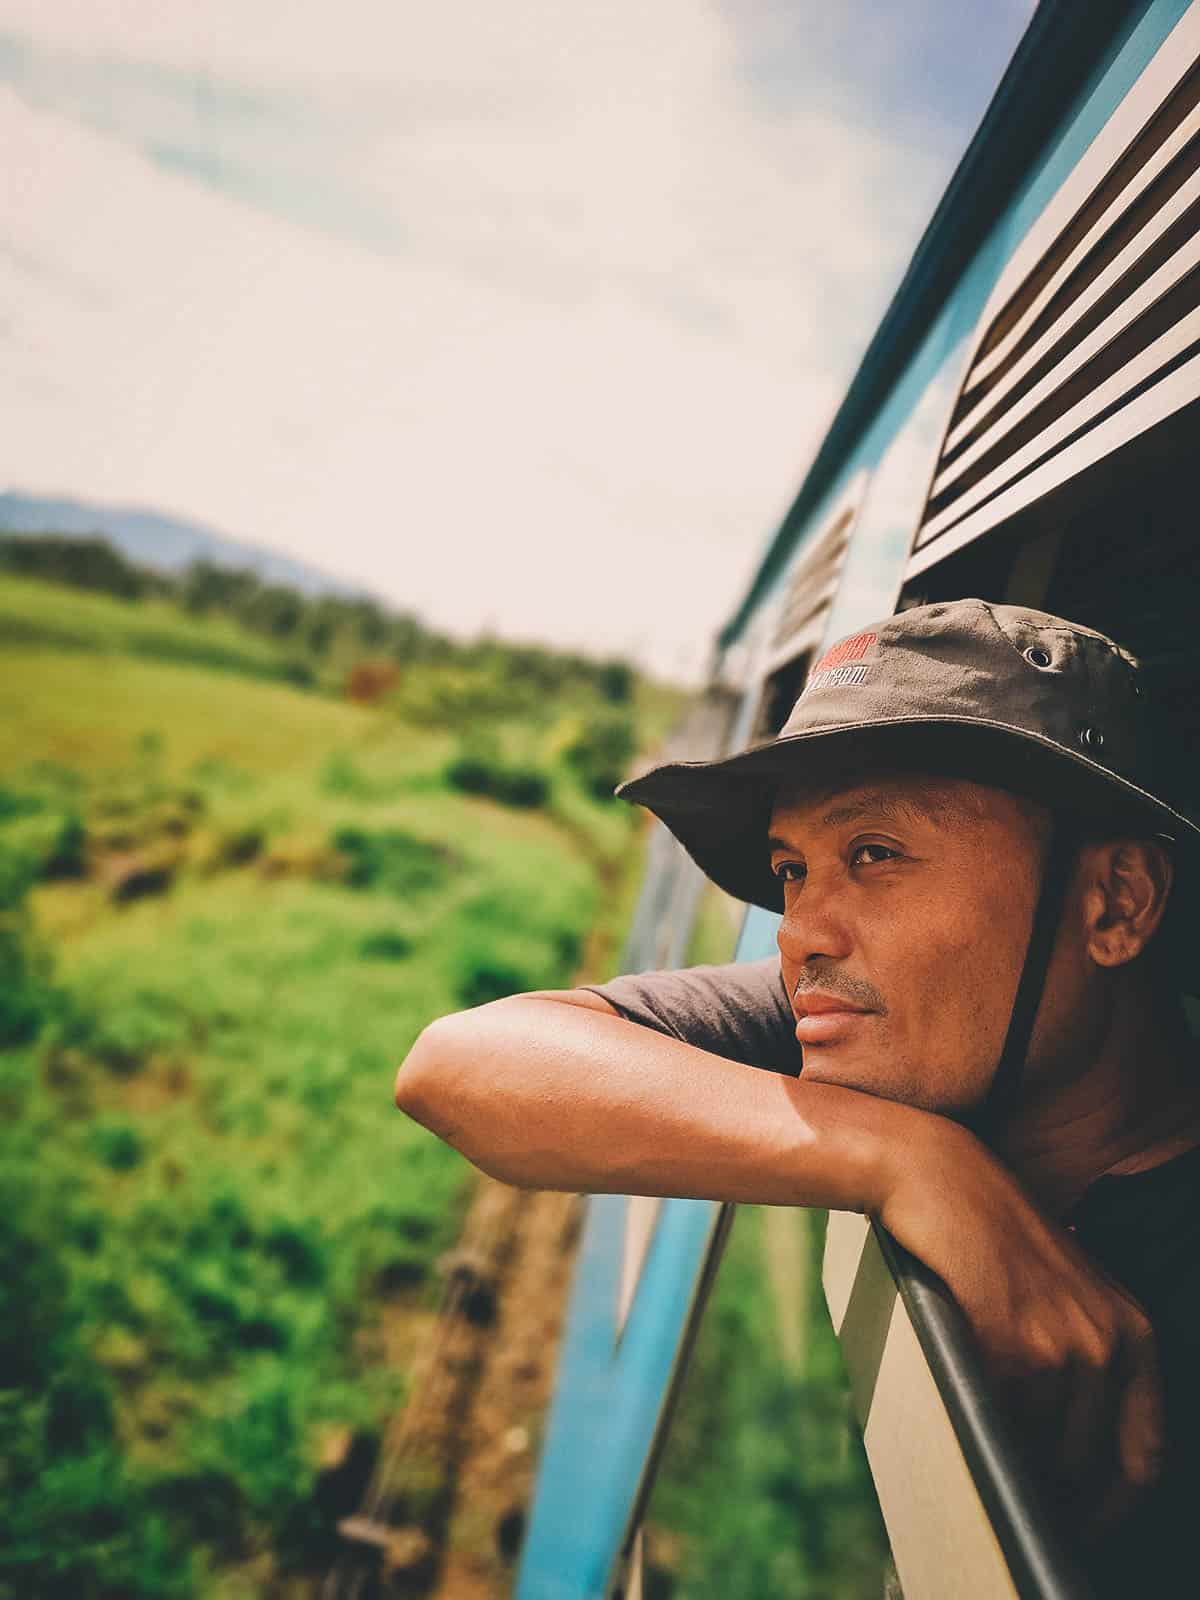 Kandy-Ella Train Ride, Sri Lanka